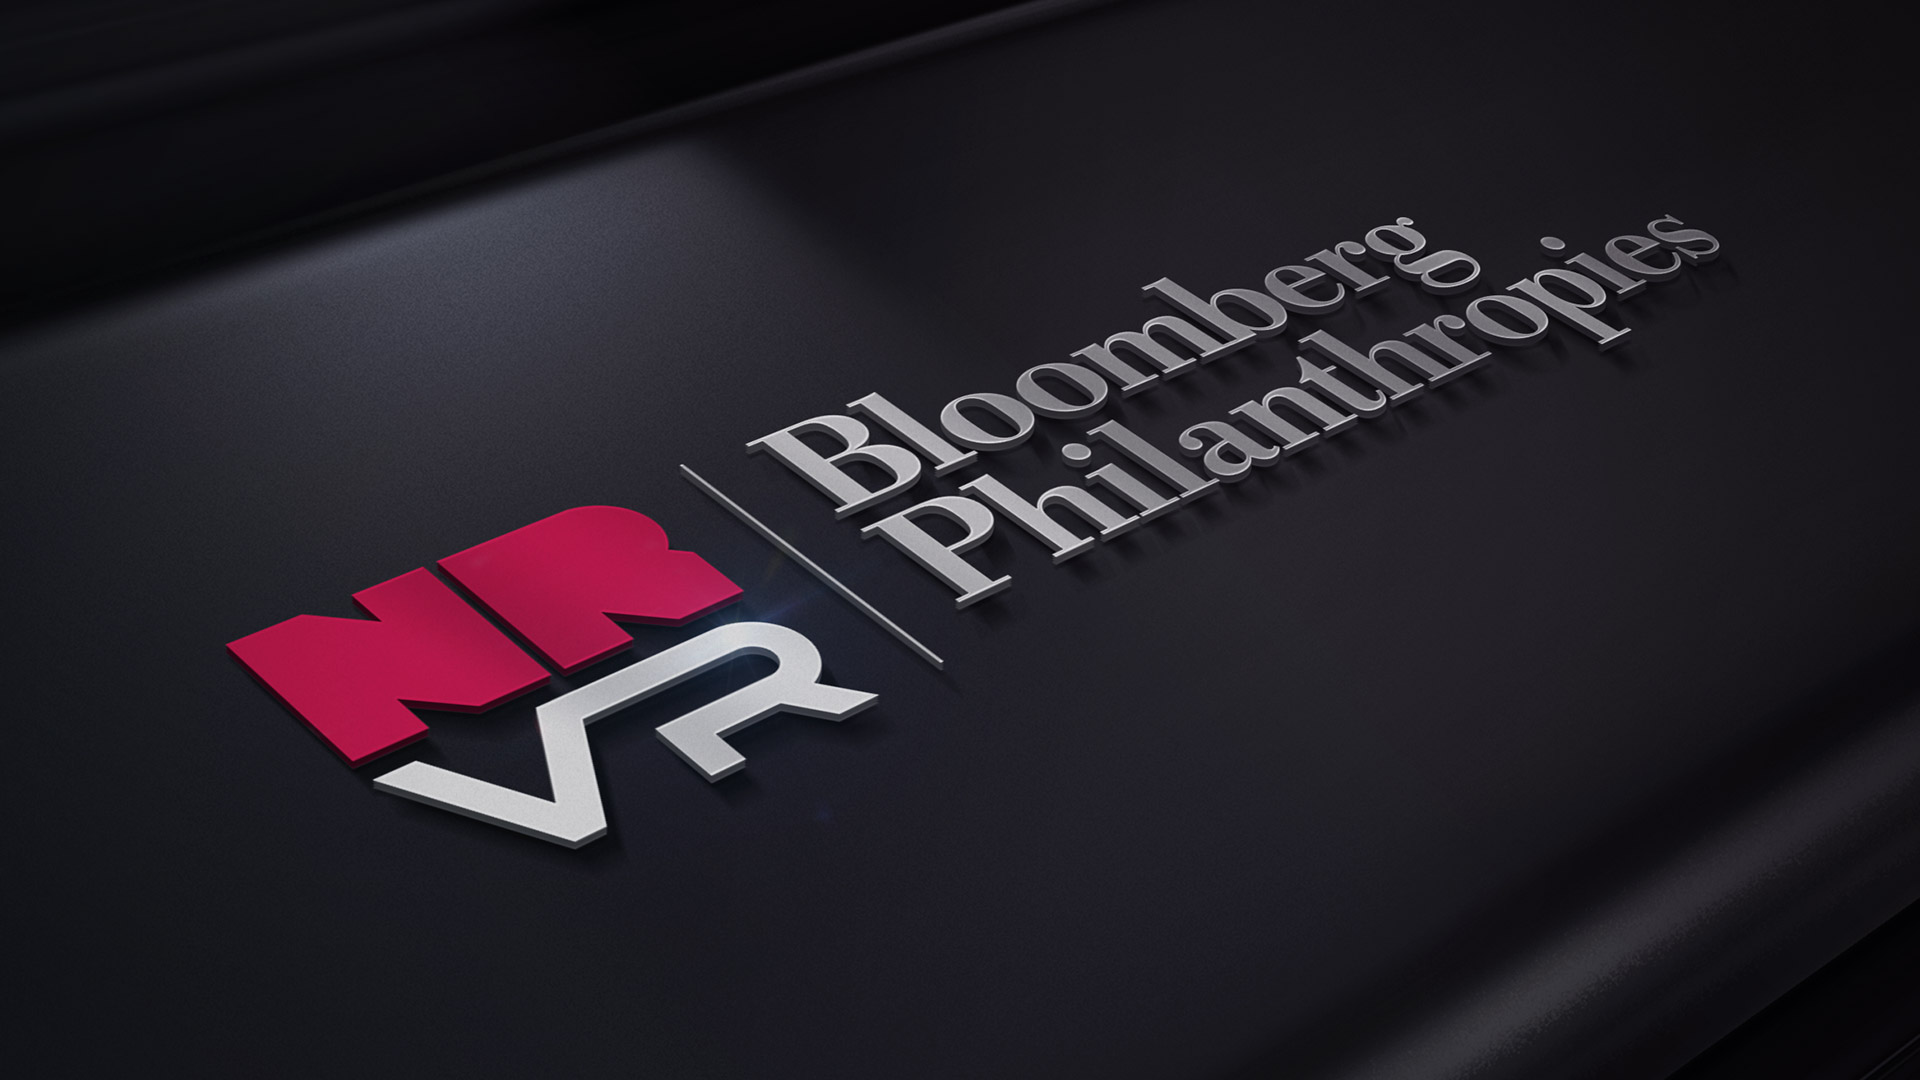 bloomberg-philanthropies-featured-work-